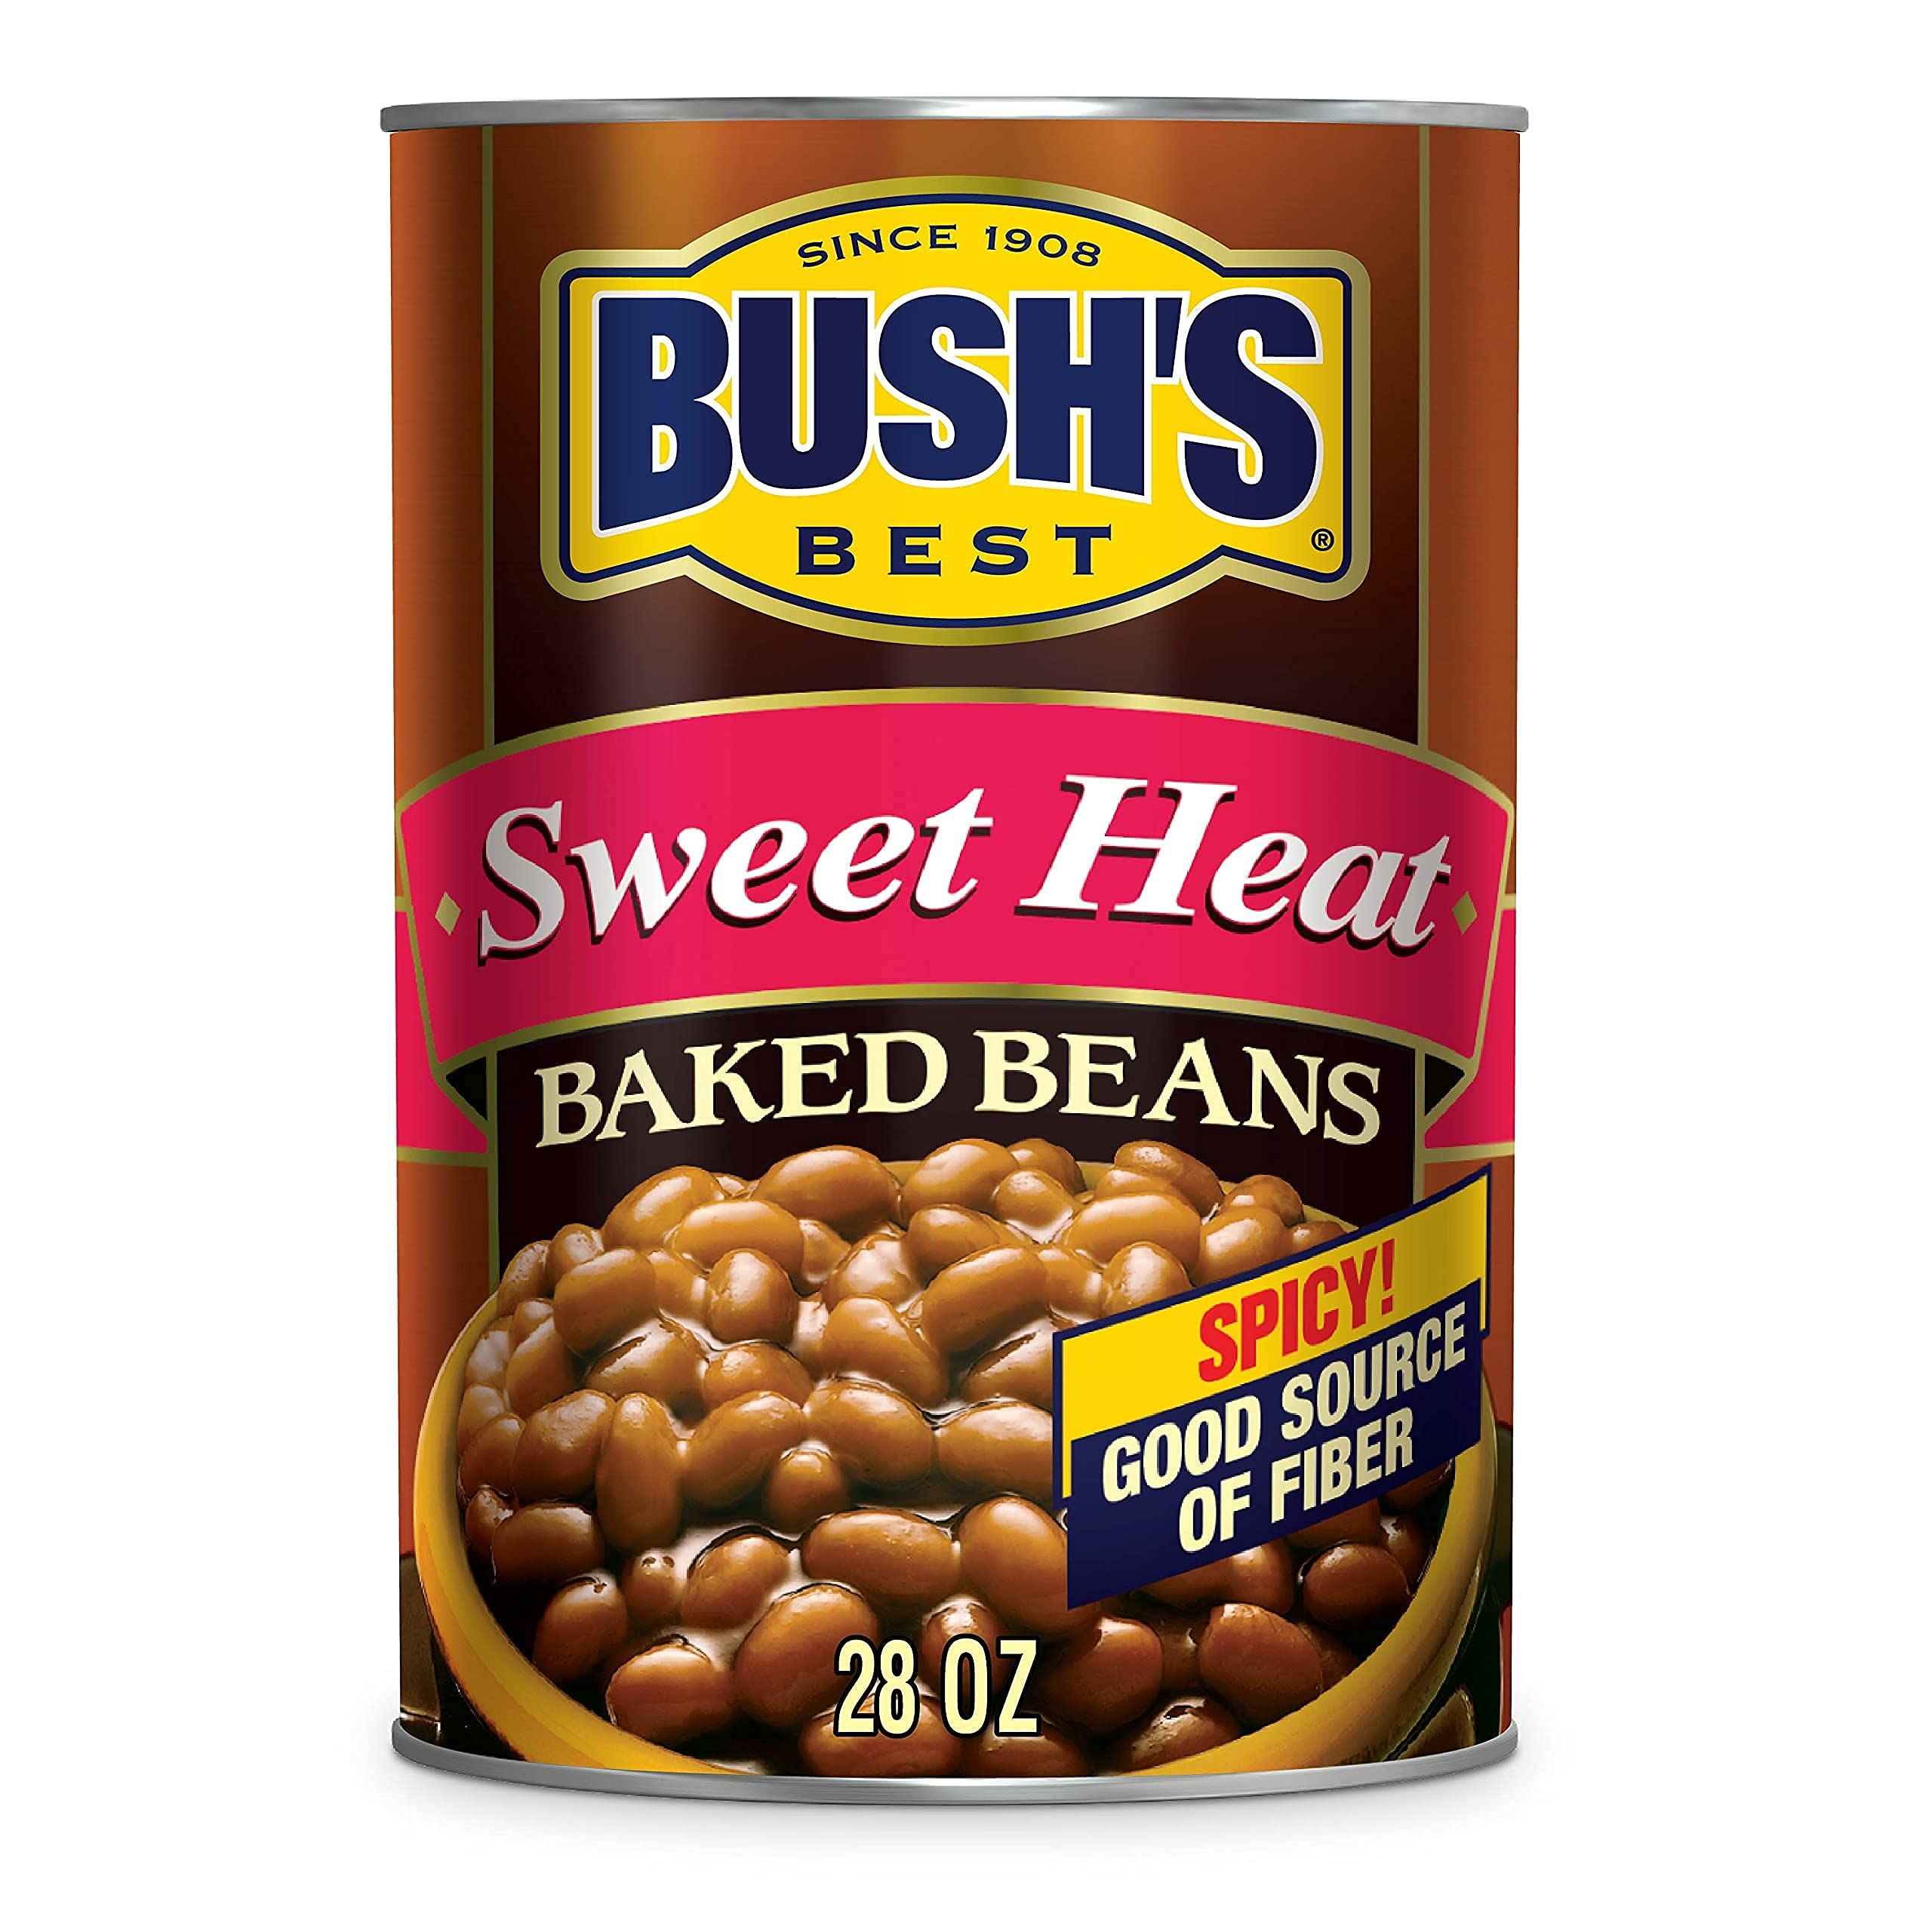 BUSH'S BEST Sweet Heat Baked Beans, Sweet & Spicy, Canned Beans, Baked Beans Canned, Source of Plant Based Protein and Fiber, Low Fat, Gluten F...